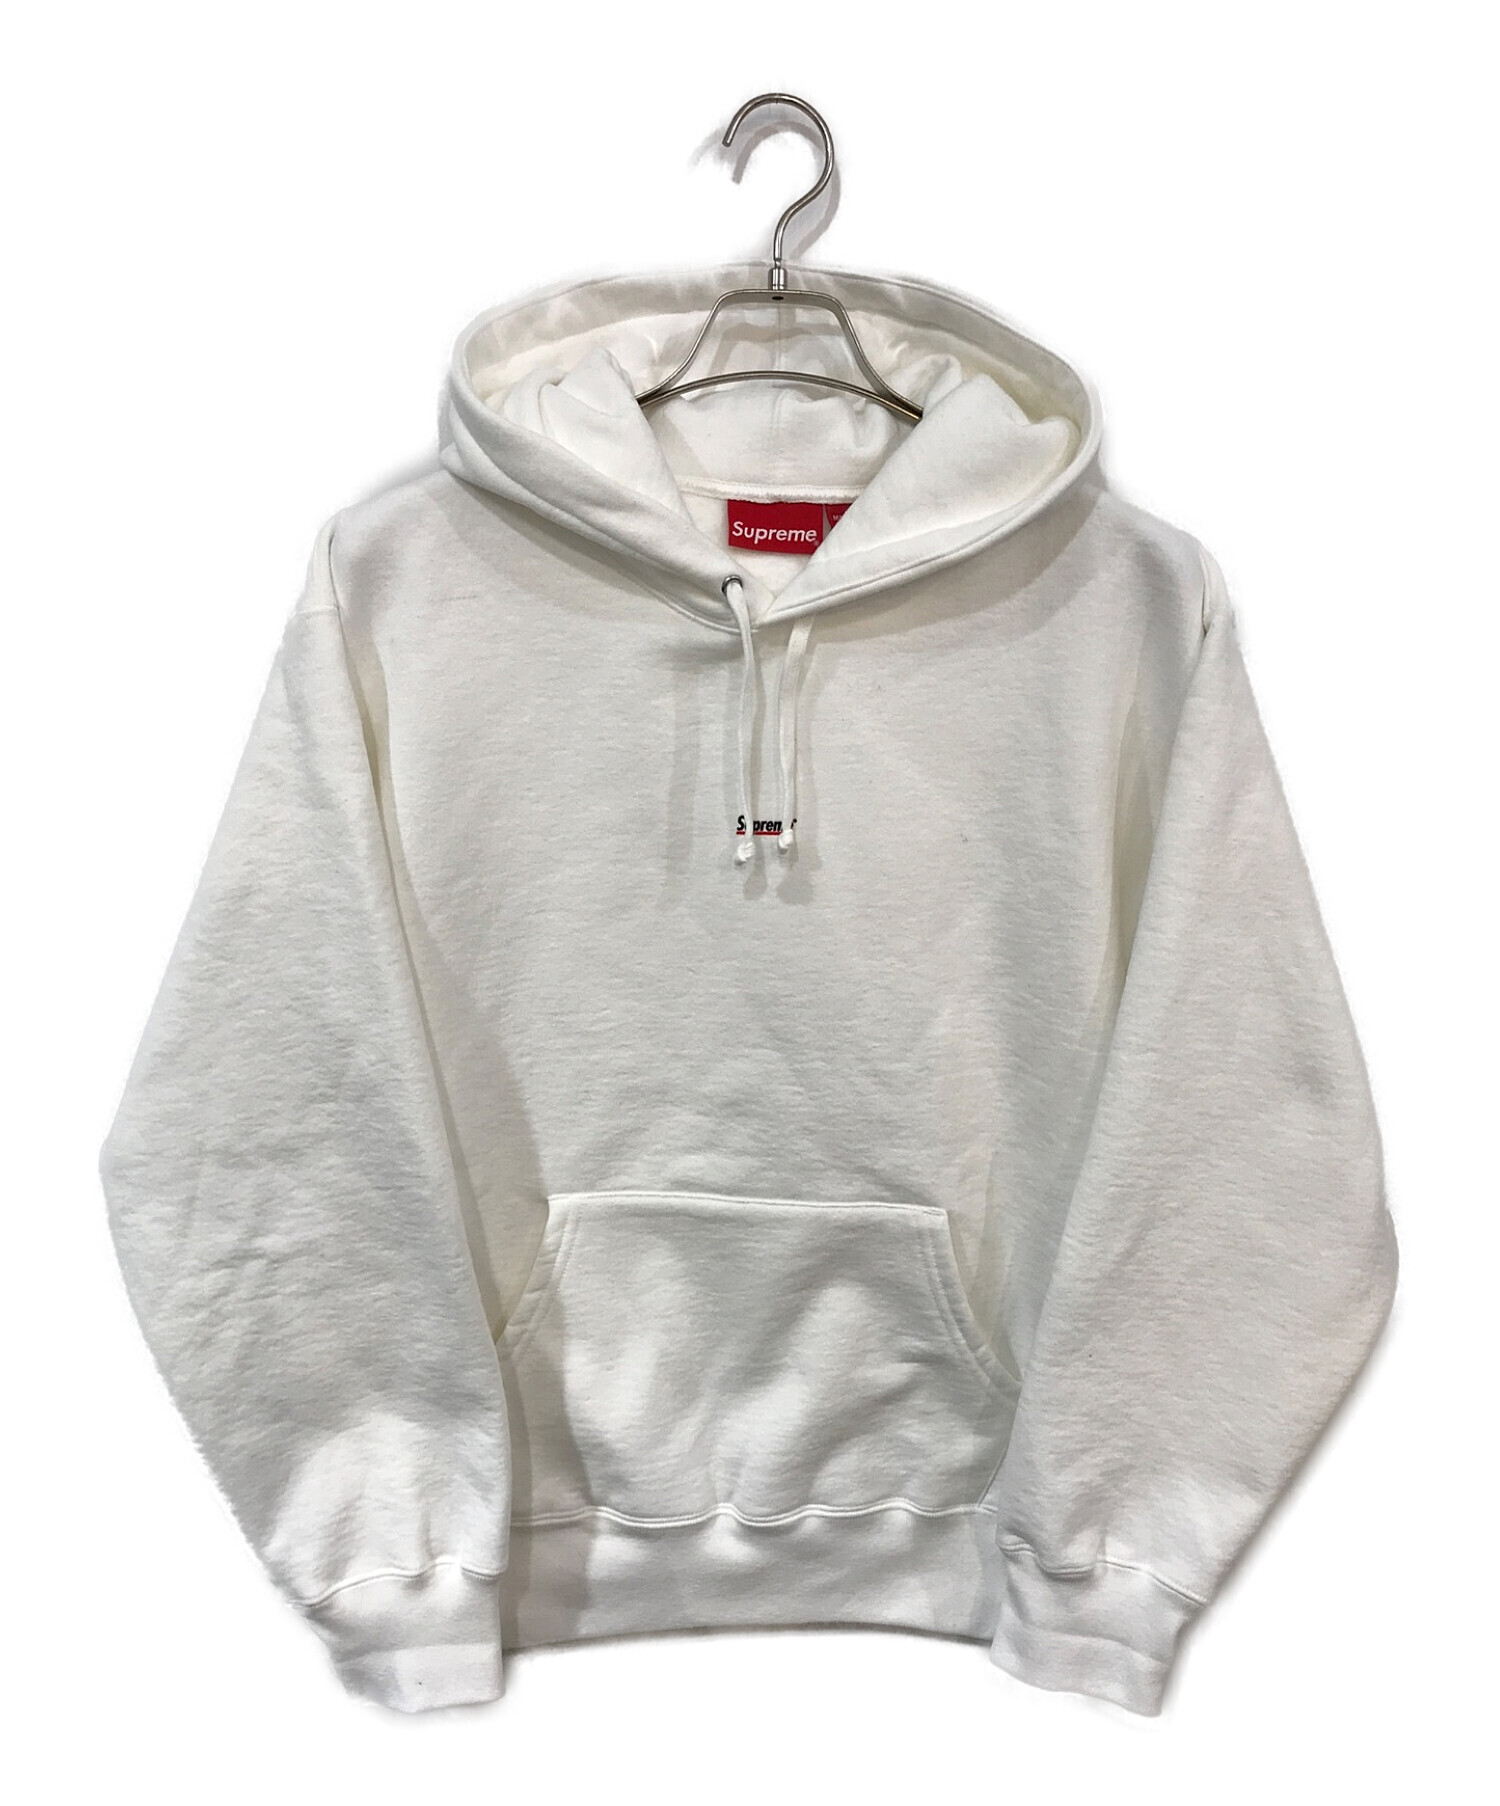 SUPREME (シュプリーム) underline hooded sweatshirt/アンダーラインフーデッドスウェットシャツ ホワイト  サイズ:MEDIUM